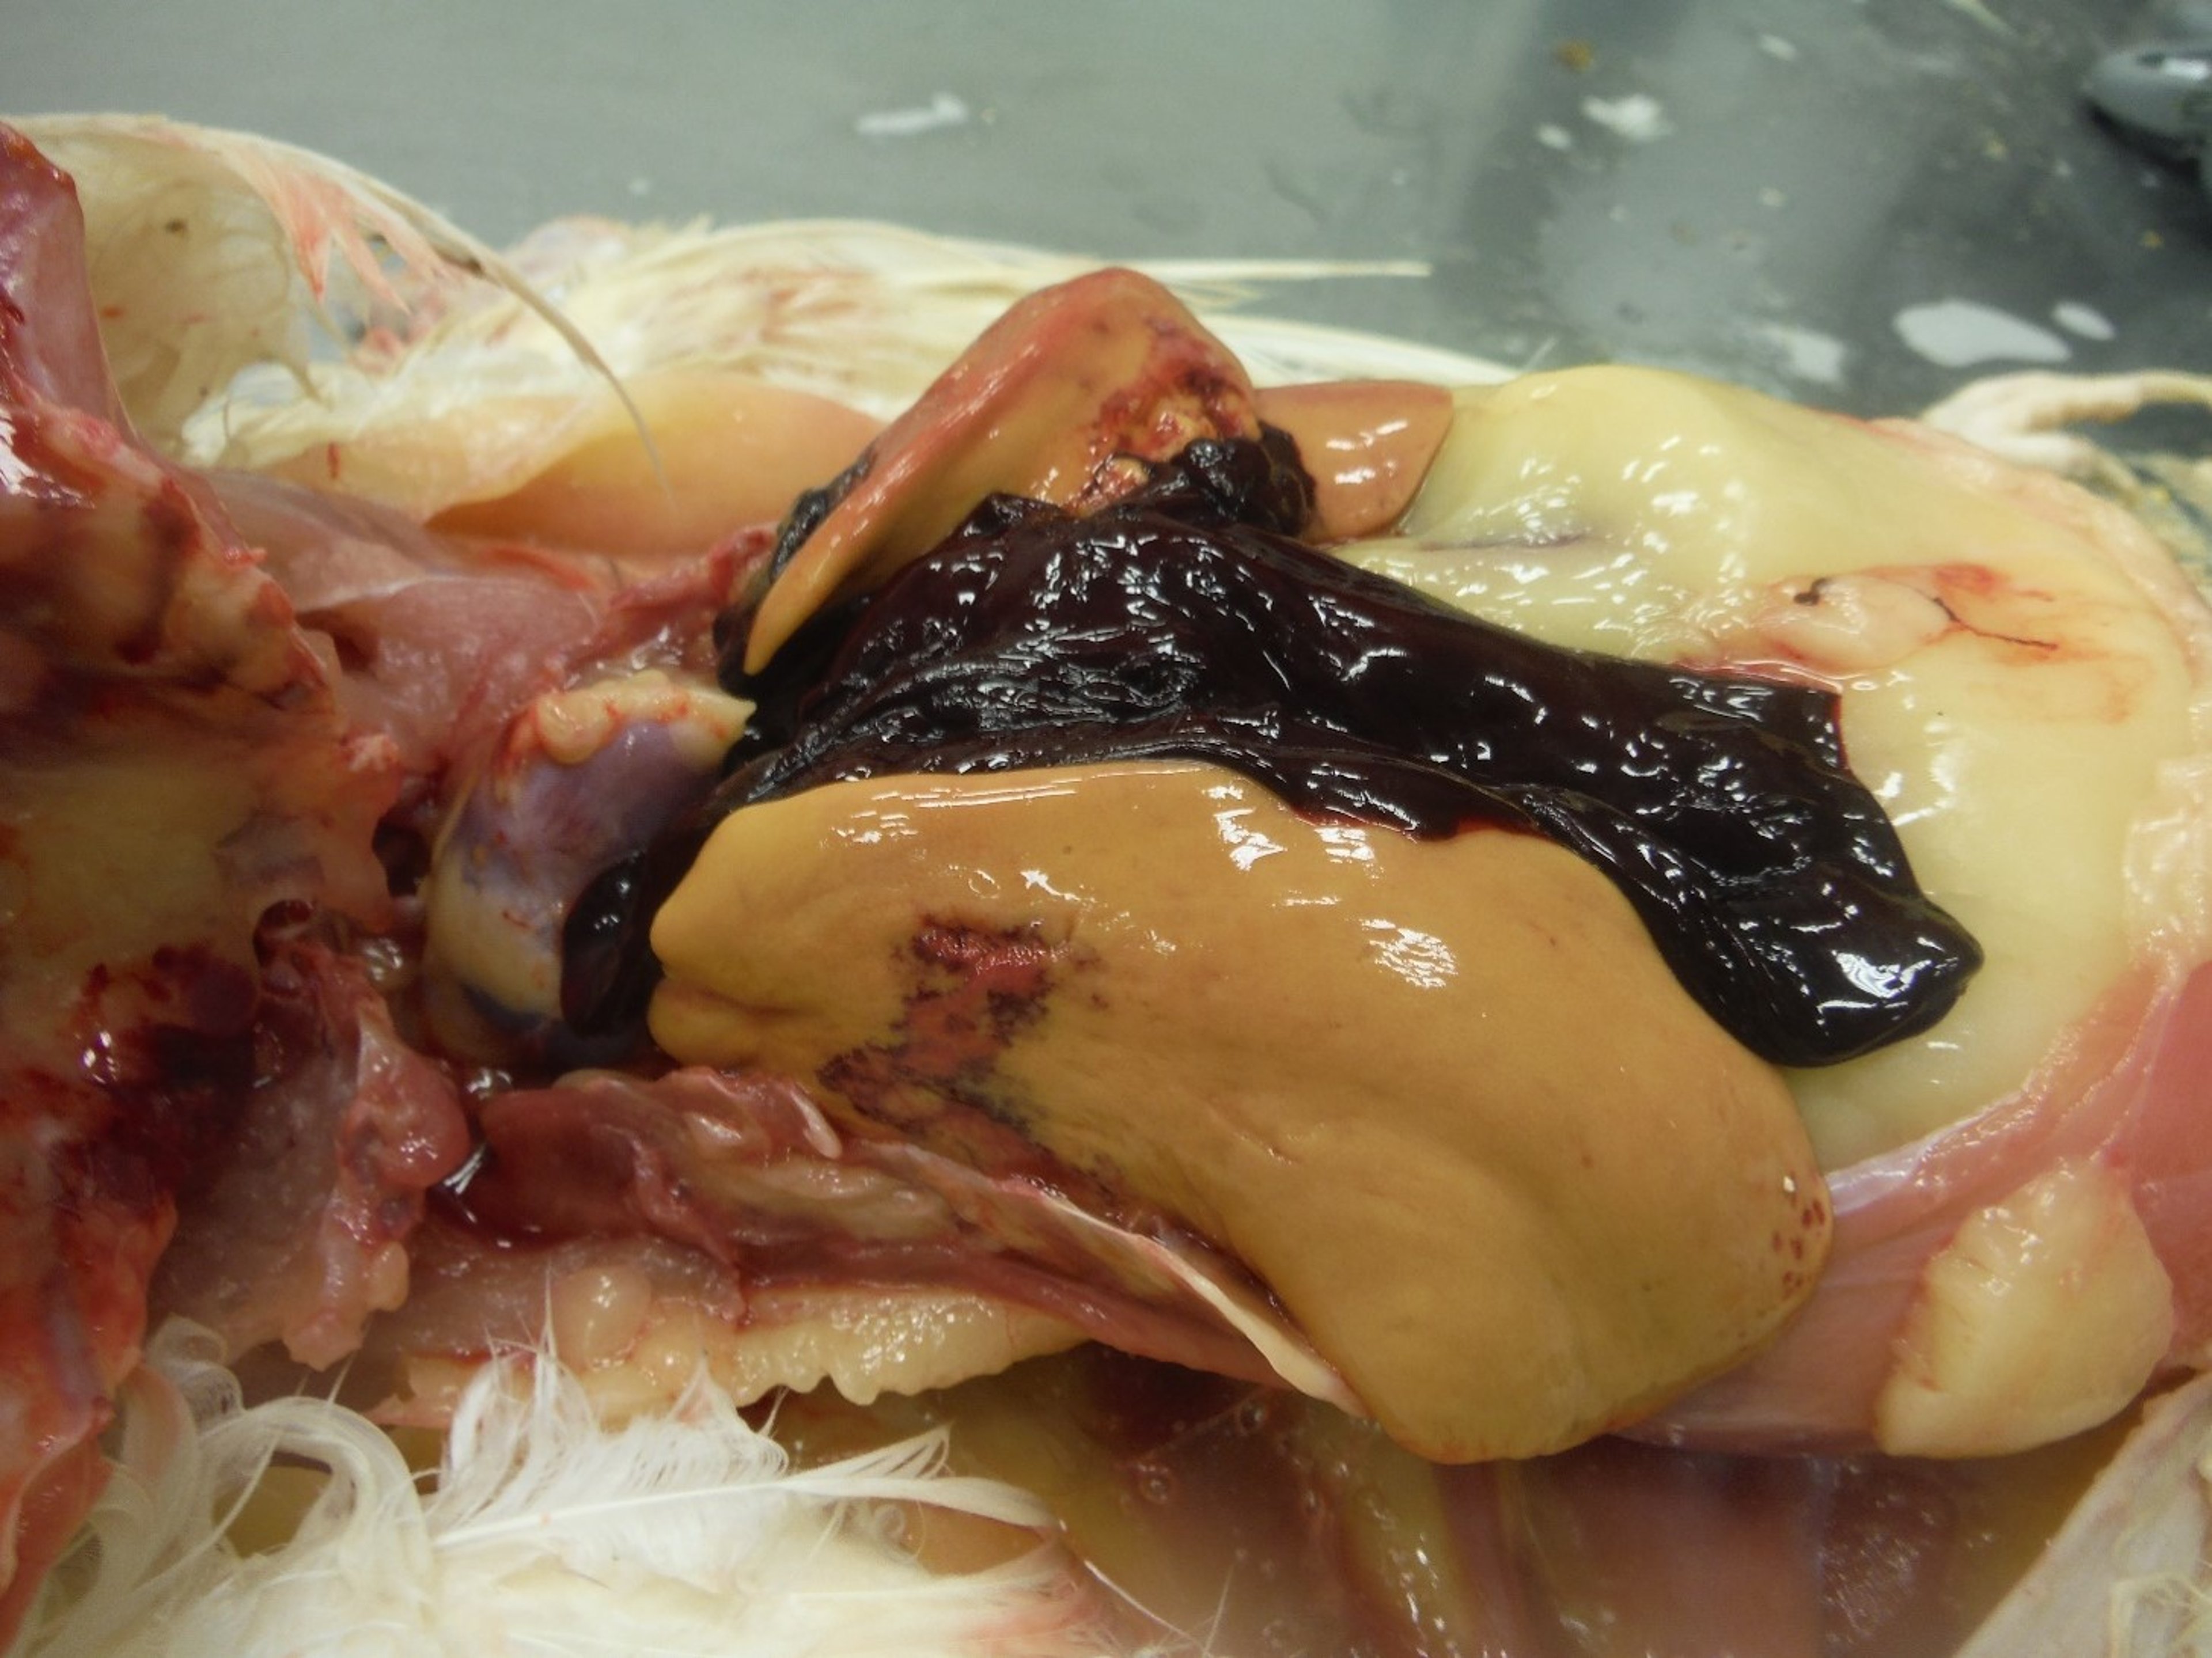 Fatty liver hemorrhagic syndrome, poultry